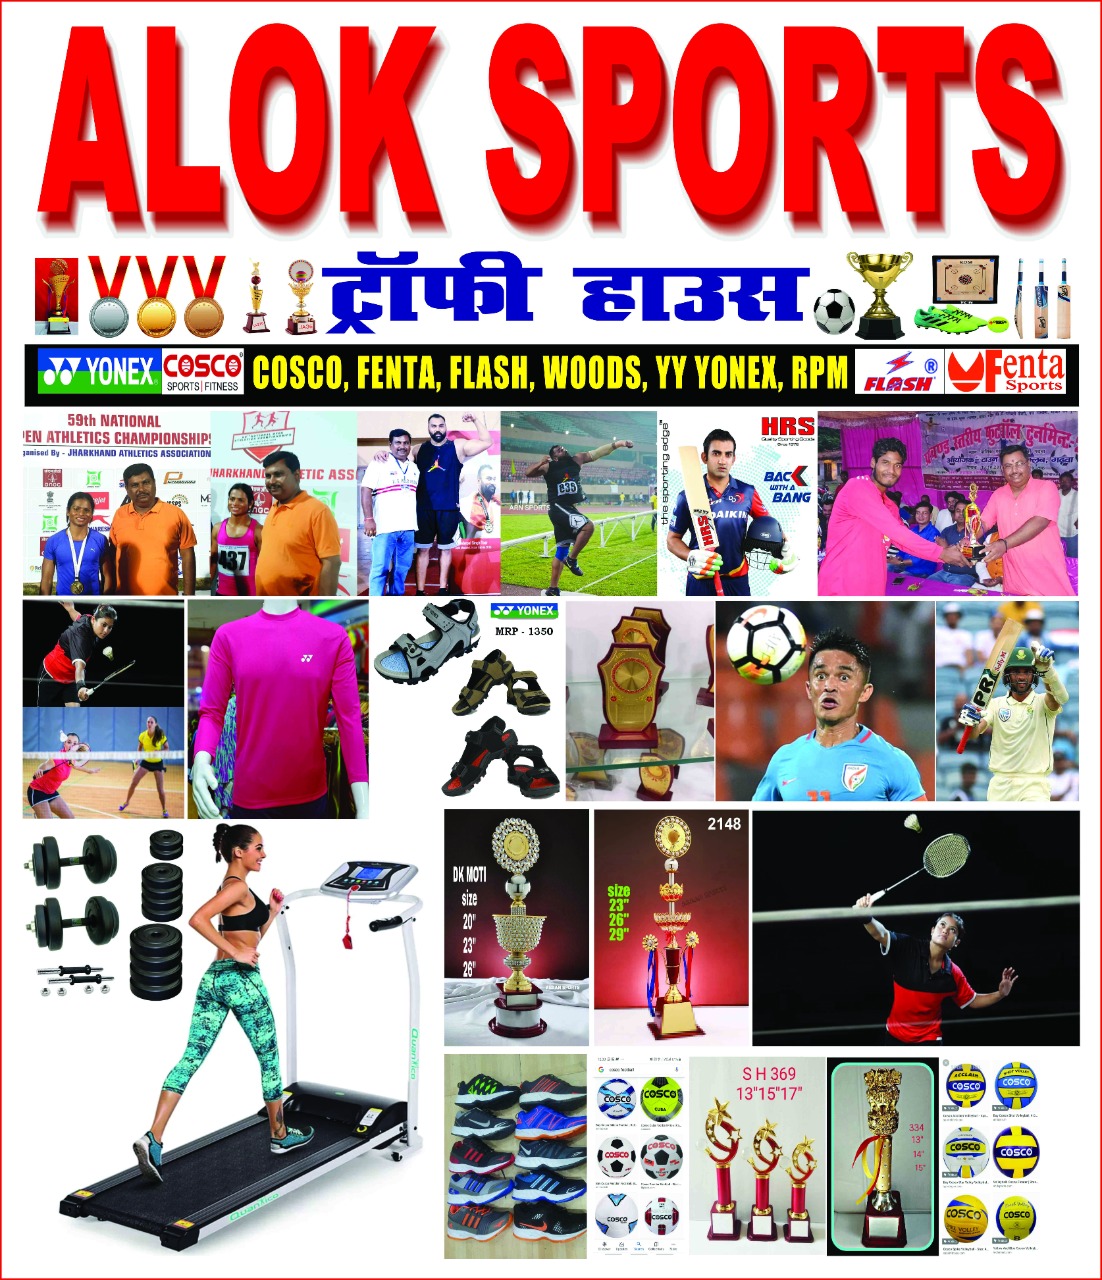 Alok sports - Profile Image